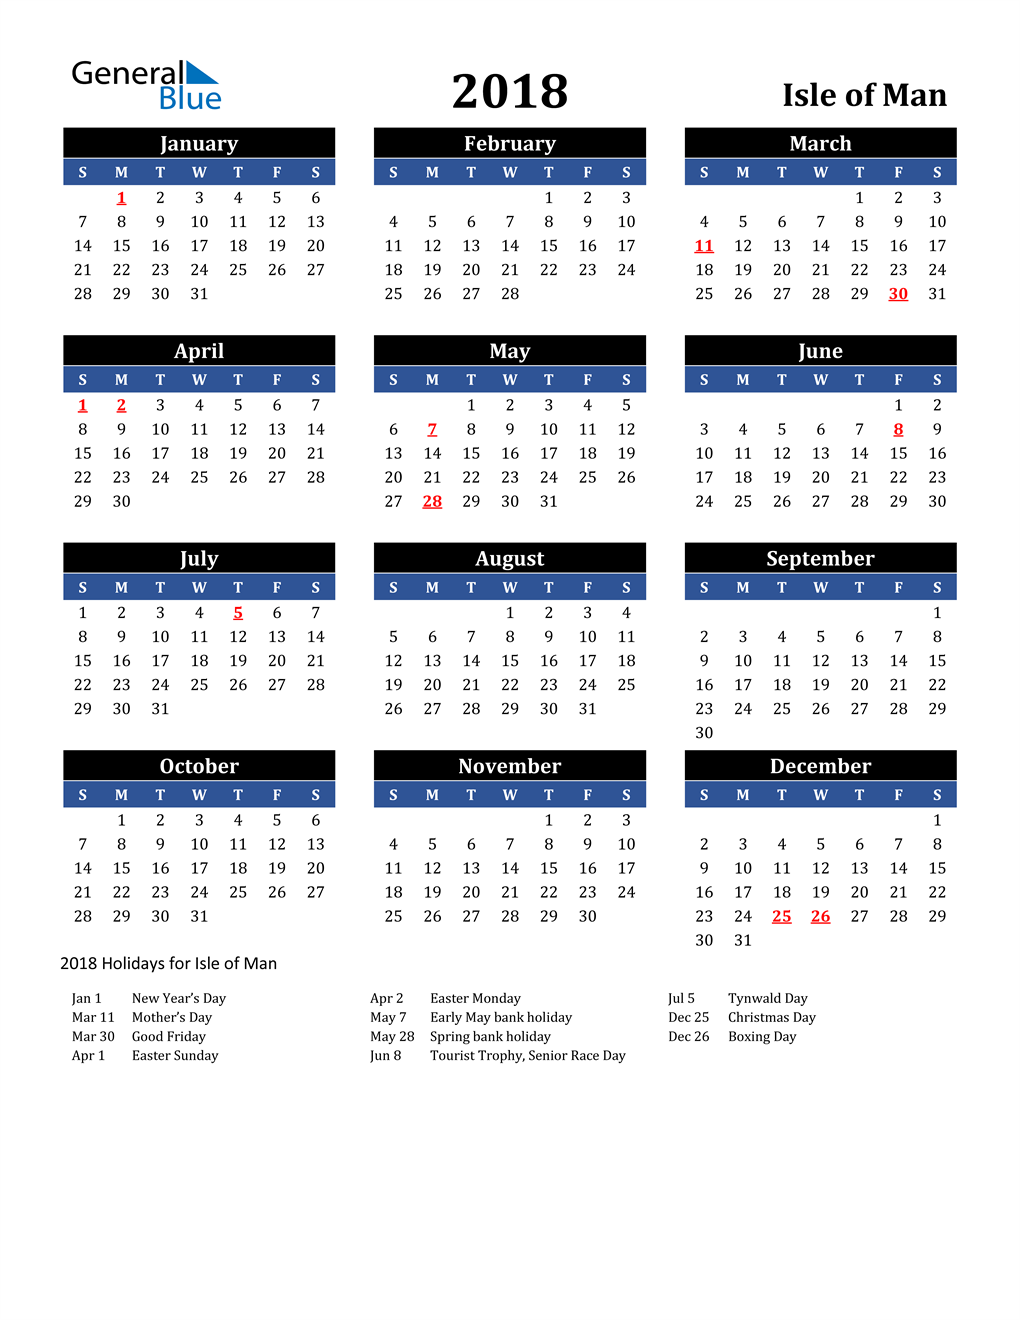 2018 isle of man calendar with holidays